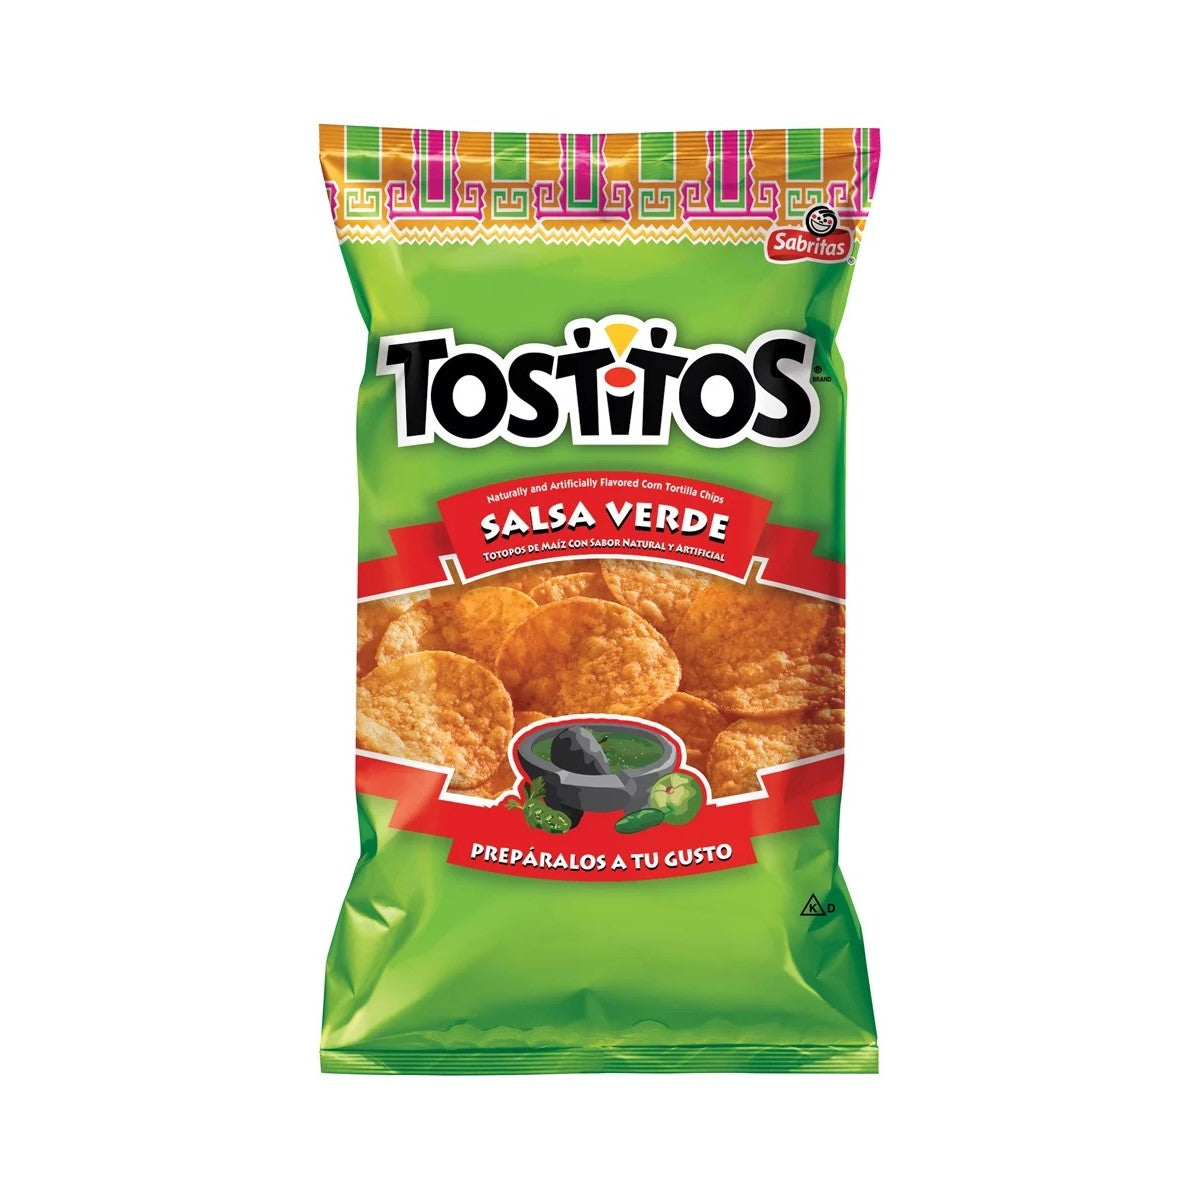 Tostitos Salsa Verde Chips 2.625oz